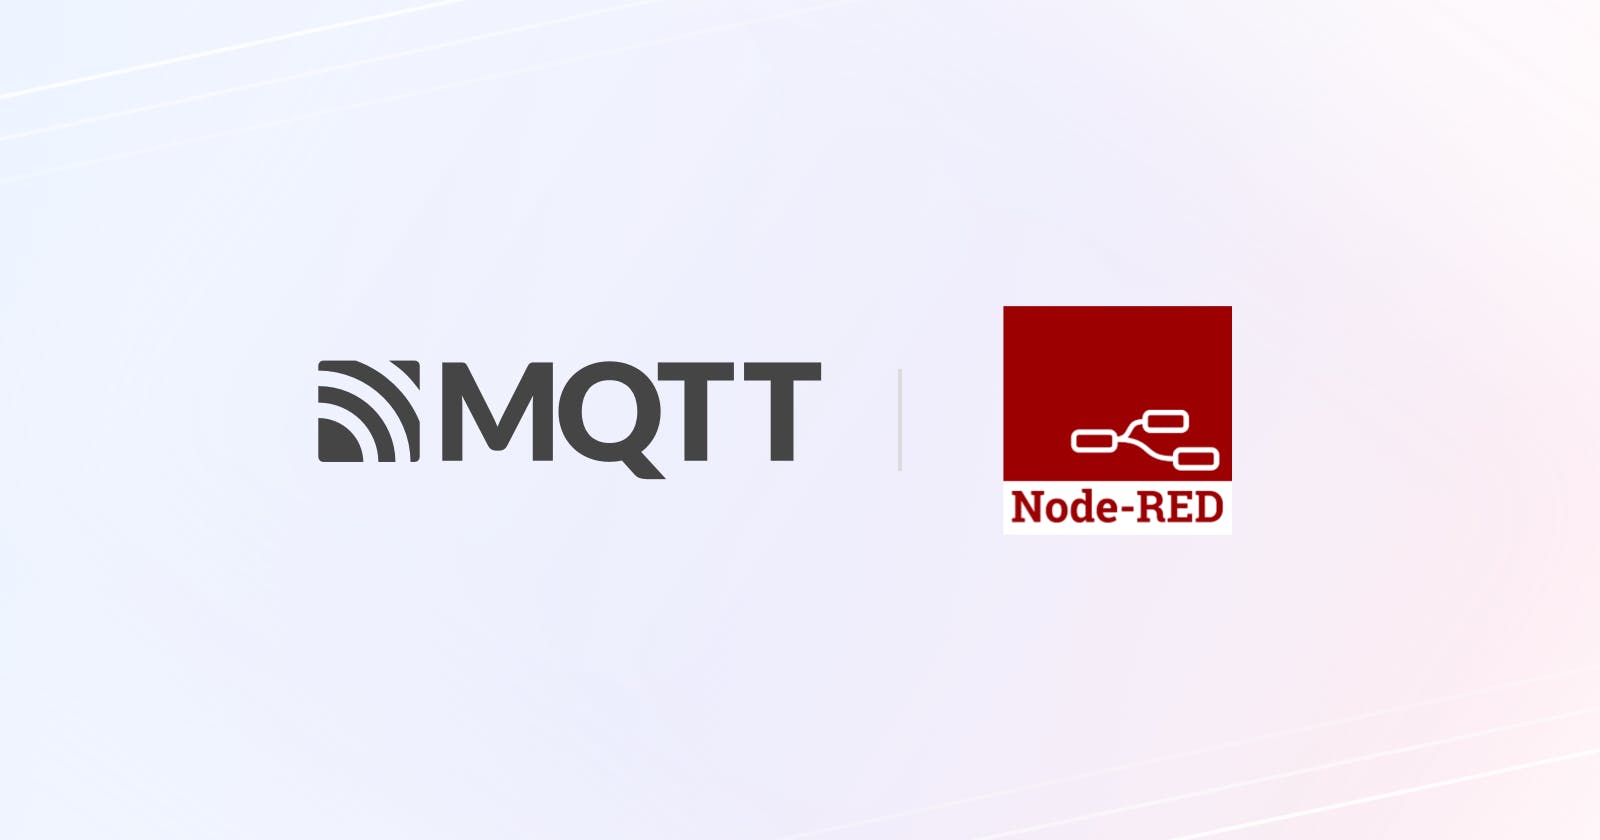 Process MQTT Data with Node-RED